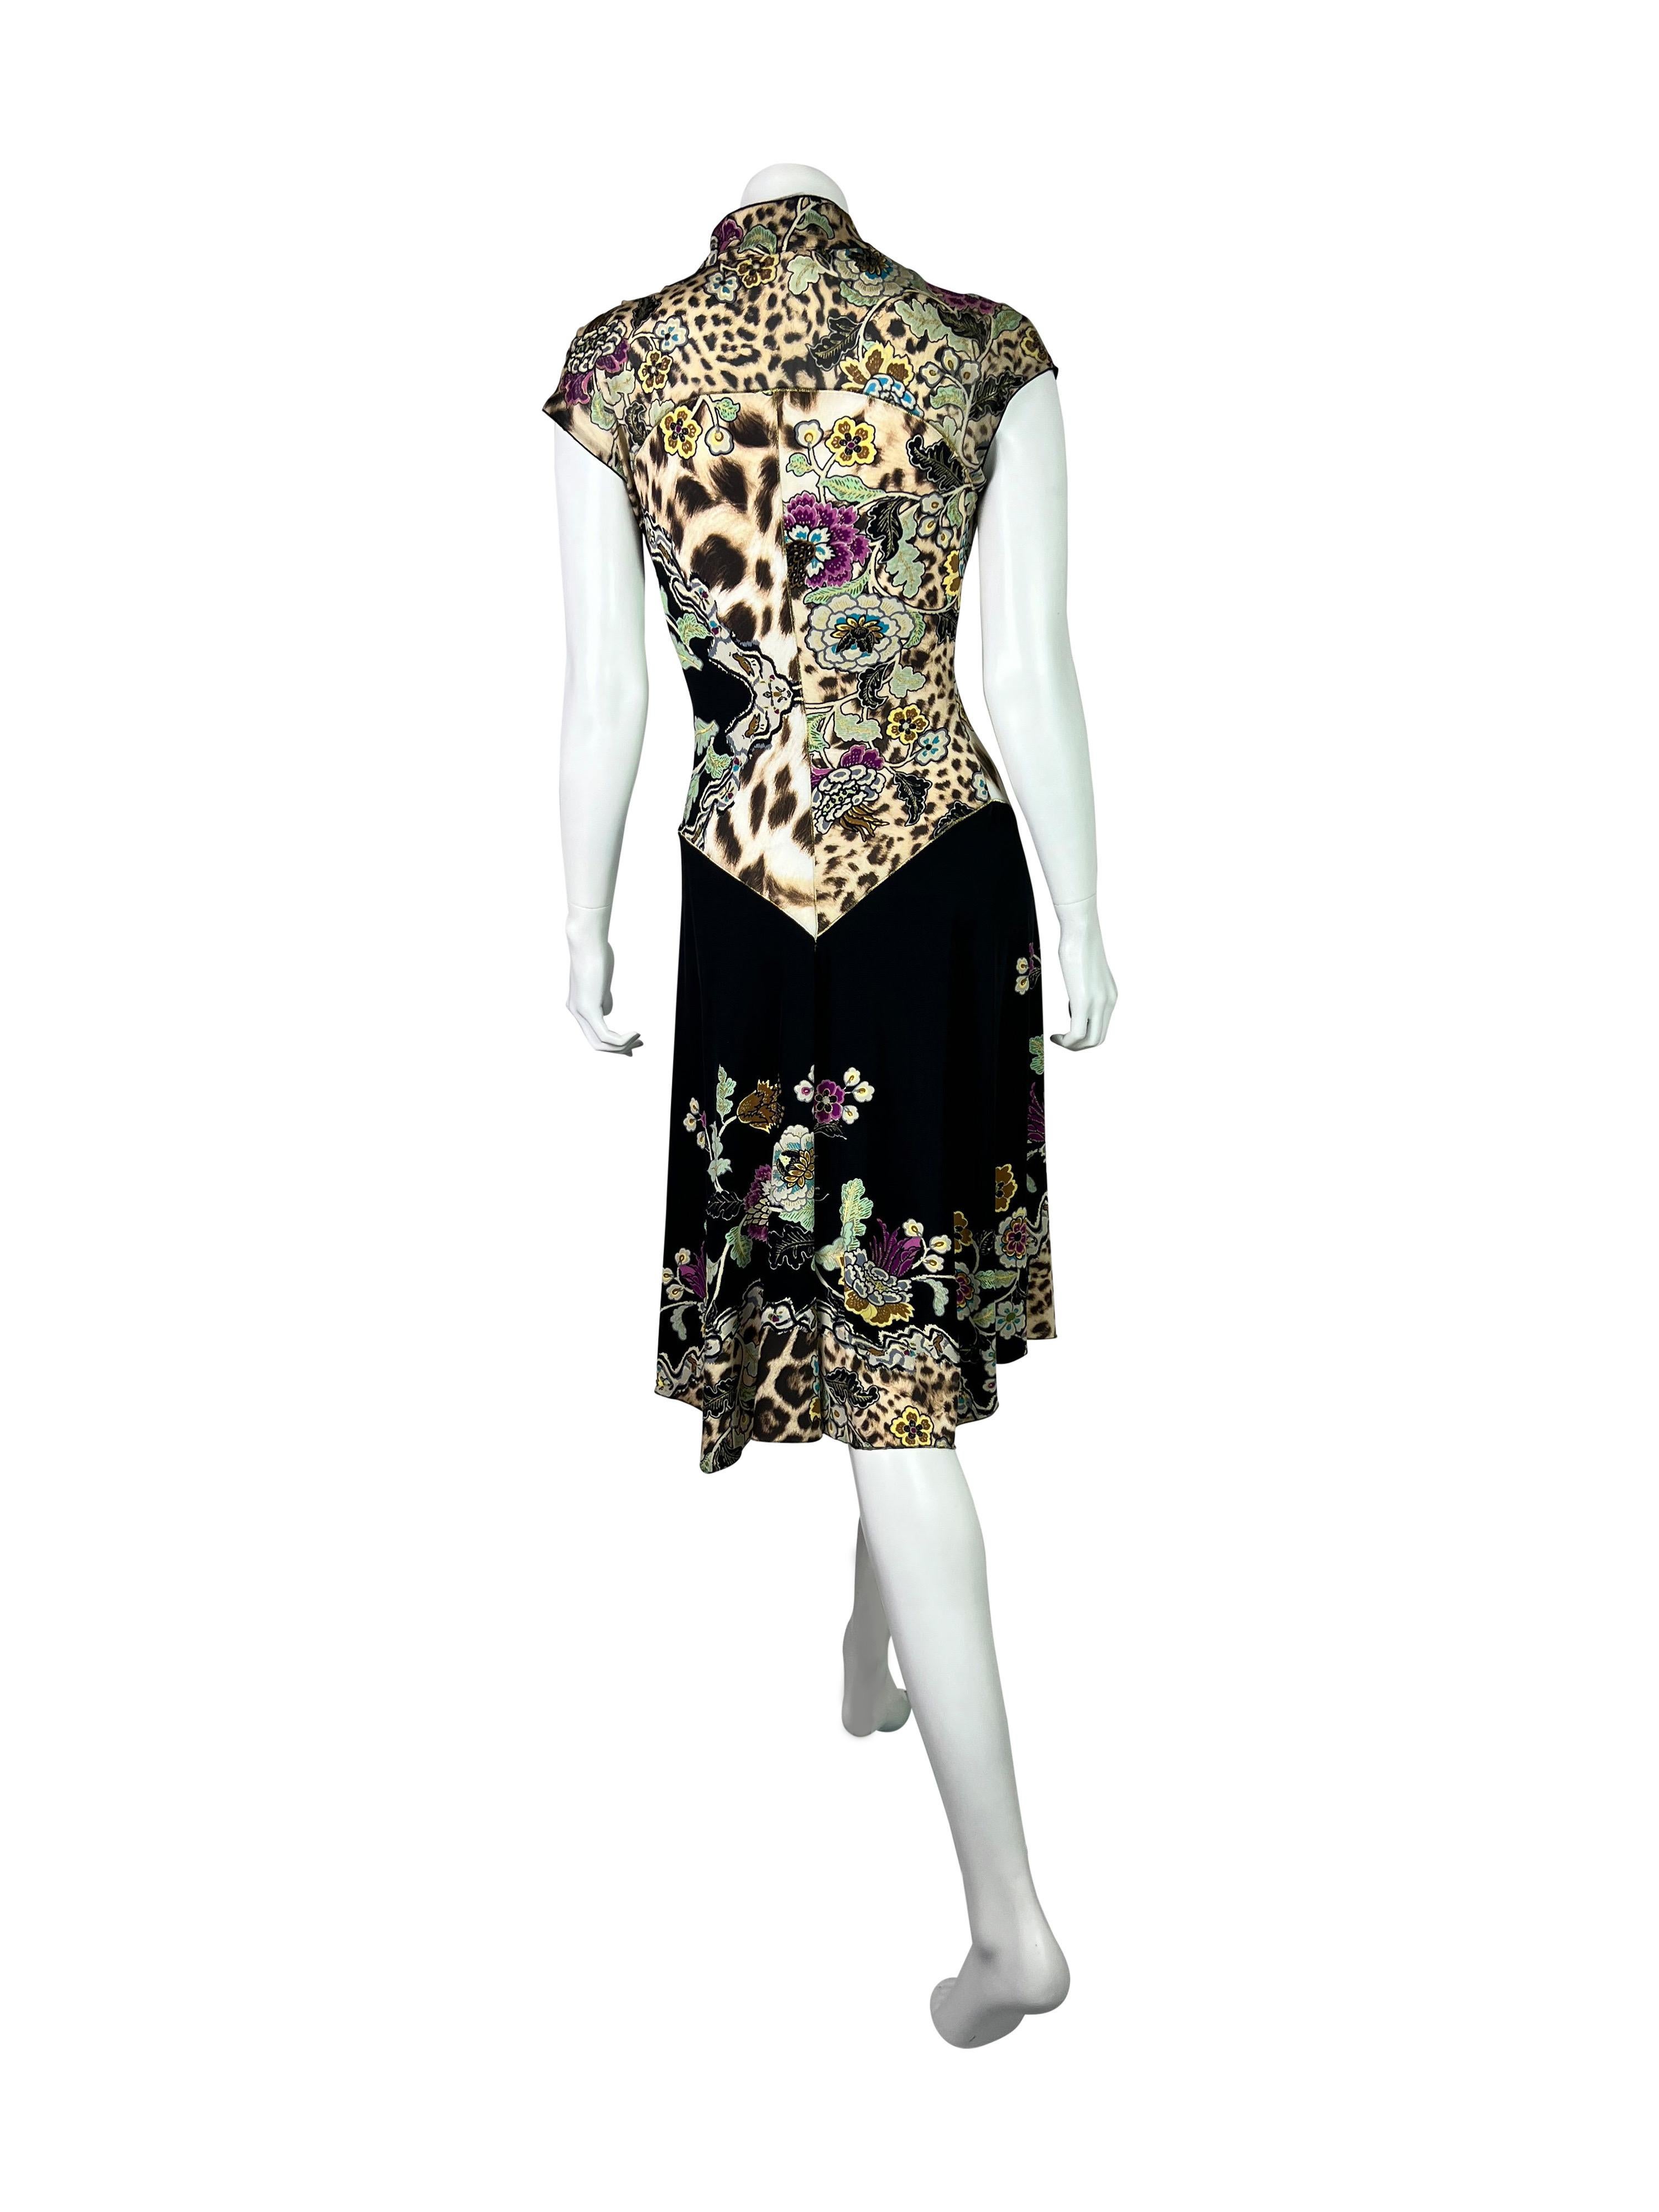 Women's SS 2003 Roberto Cavalli Chinoiserie Dress For Sale